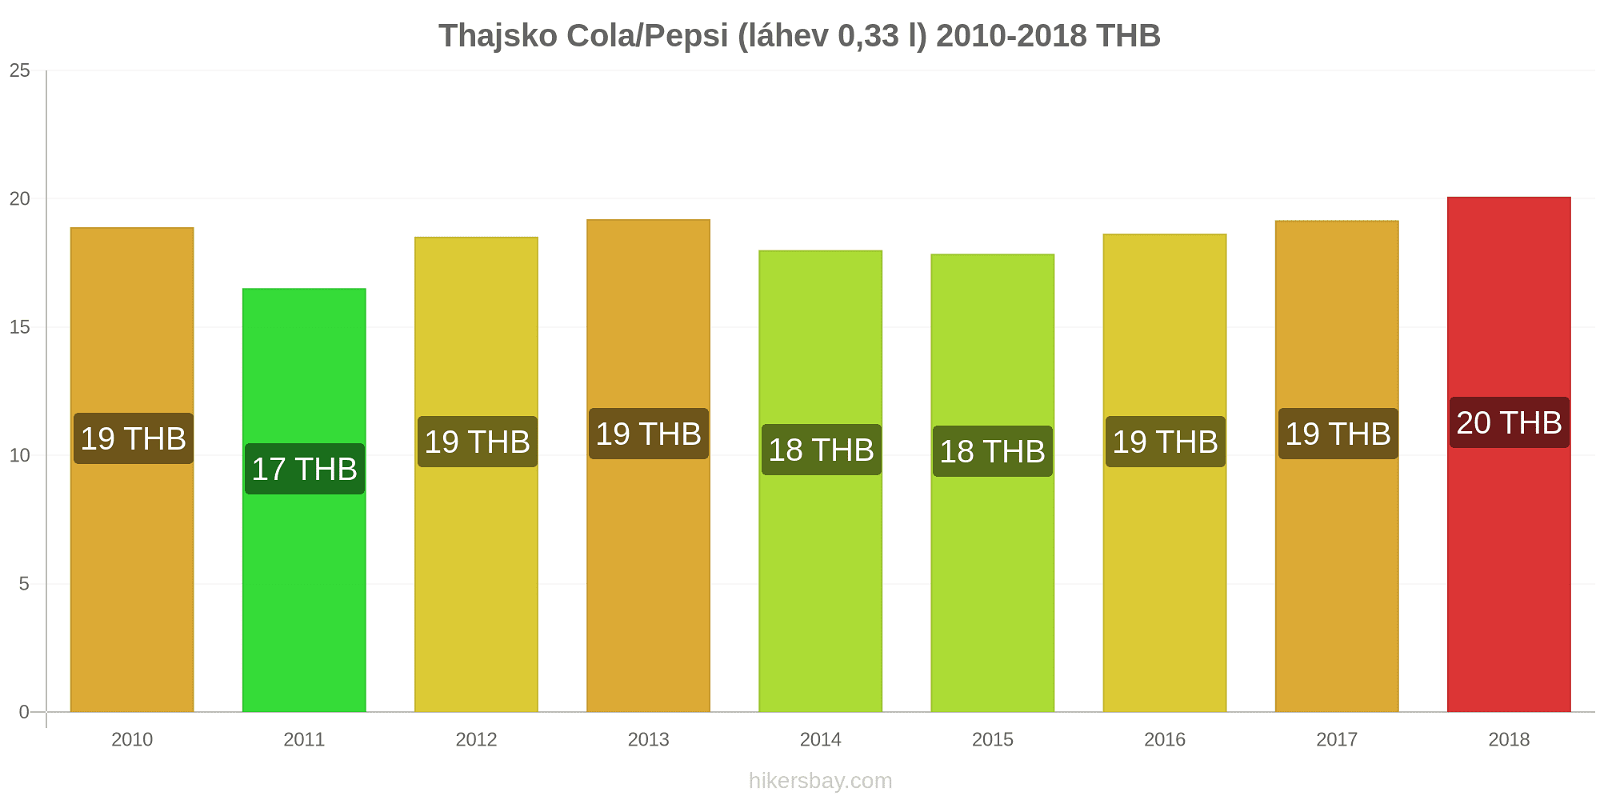 Thajsko změny cen Coca-Cola/Pepsi (láhev 0.33 l) hikersbay.com